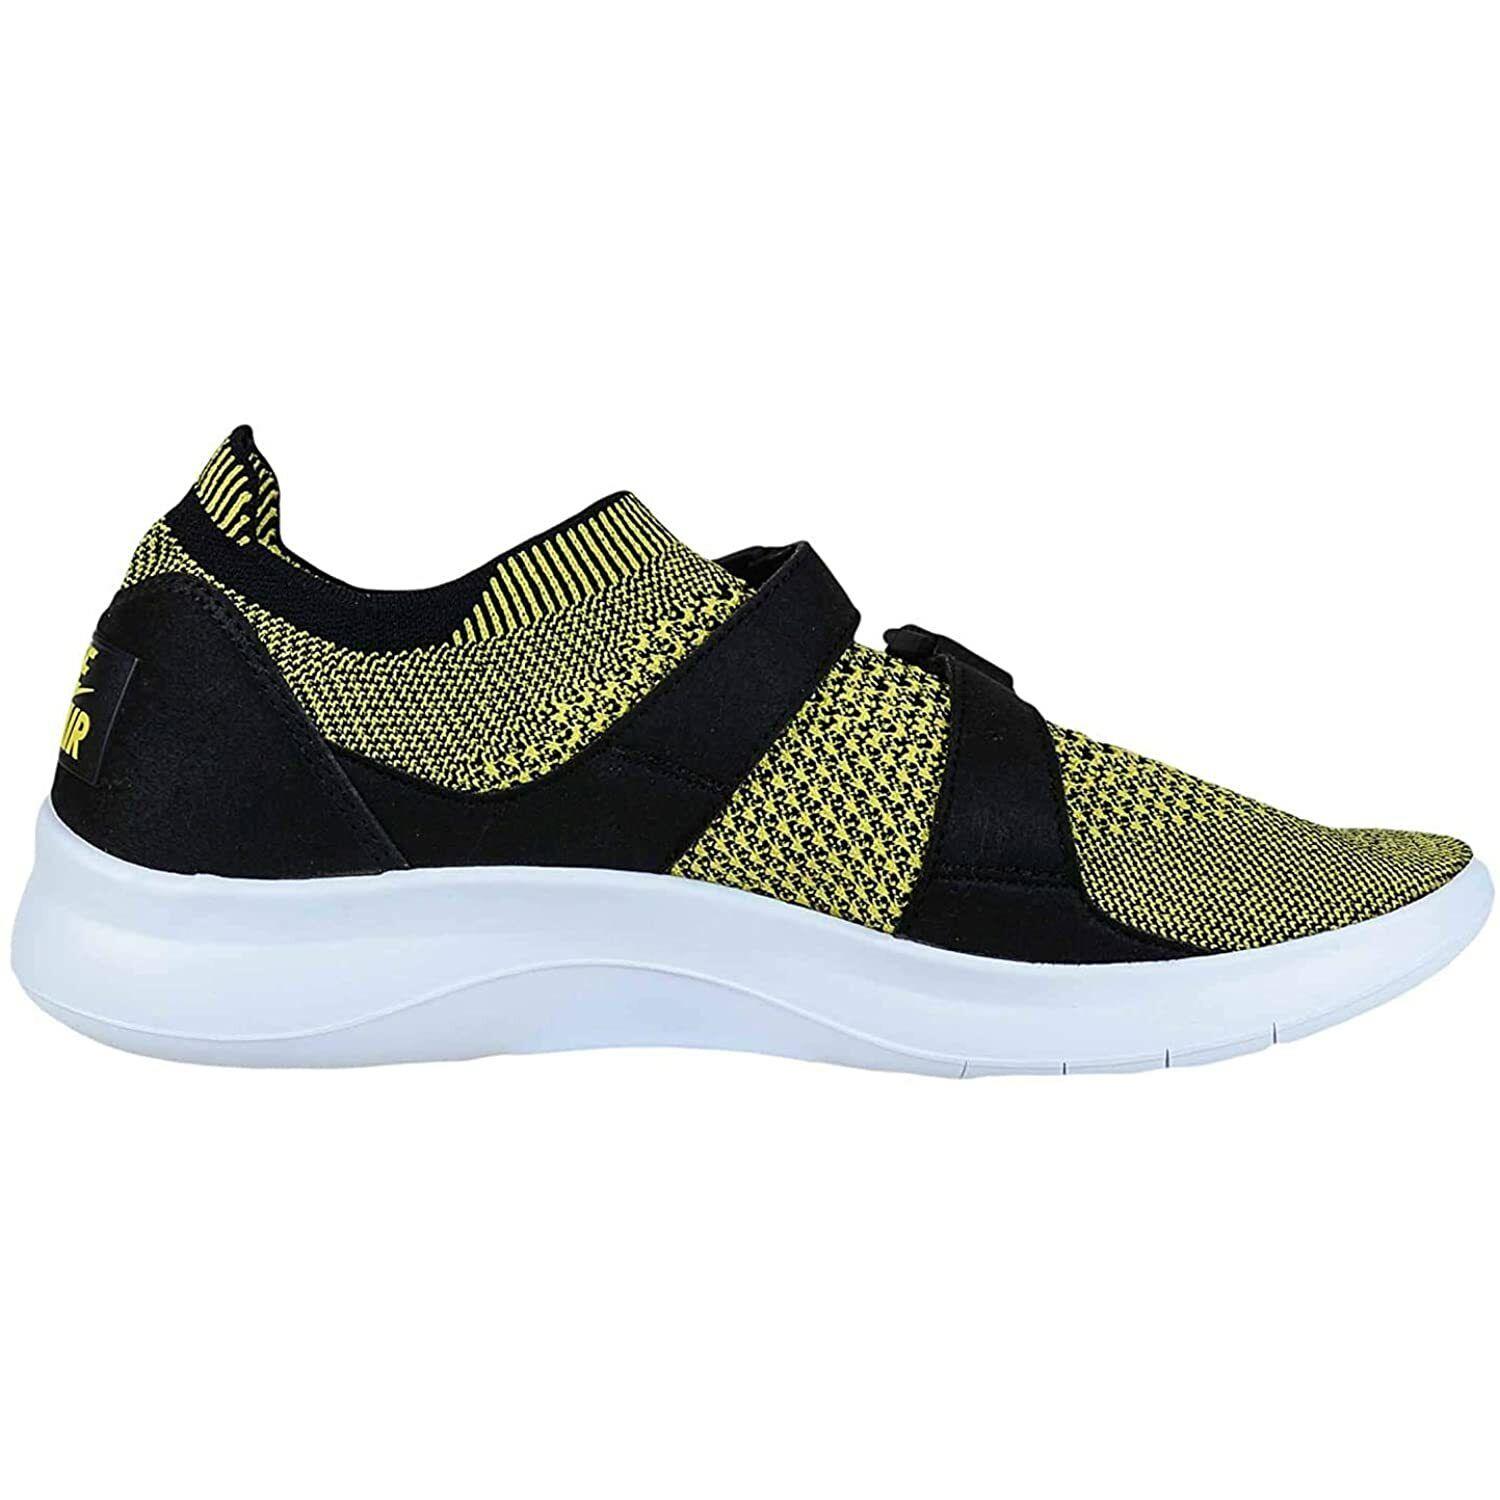 Nike W Air Sockracer Flyknit Running Yellow Casual Shoes 896447-003 Women 7.5